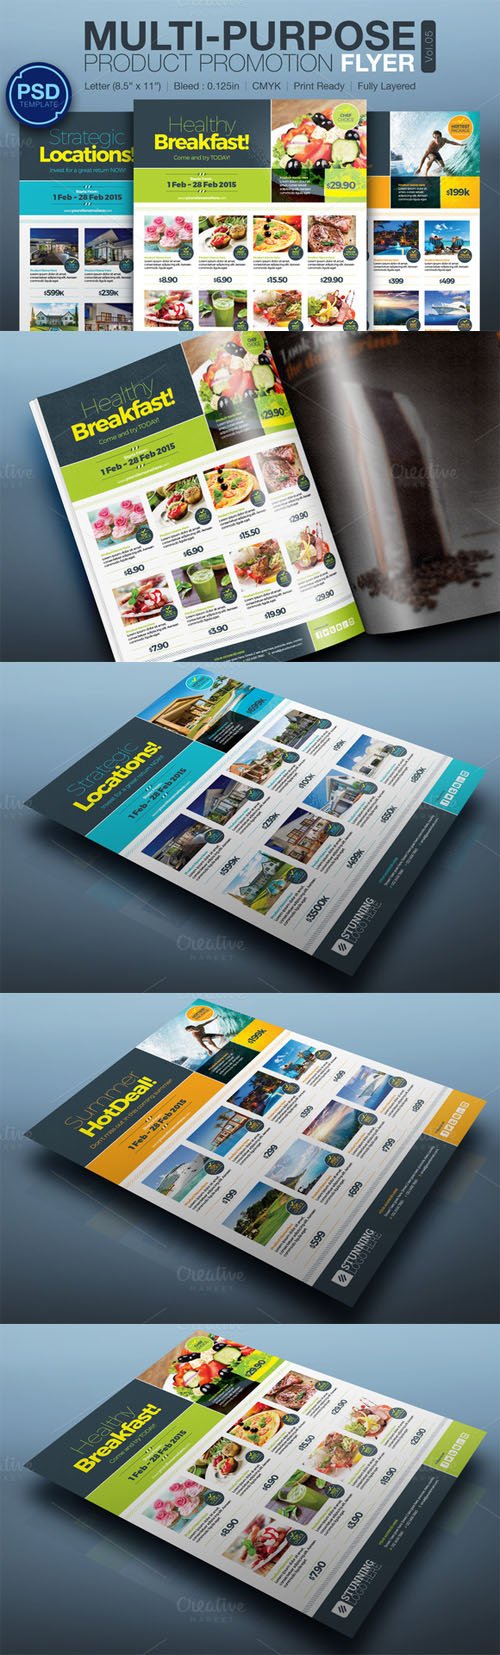 Multipurpose Product Promotion Flyer - Creativemarket 162612